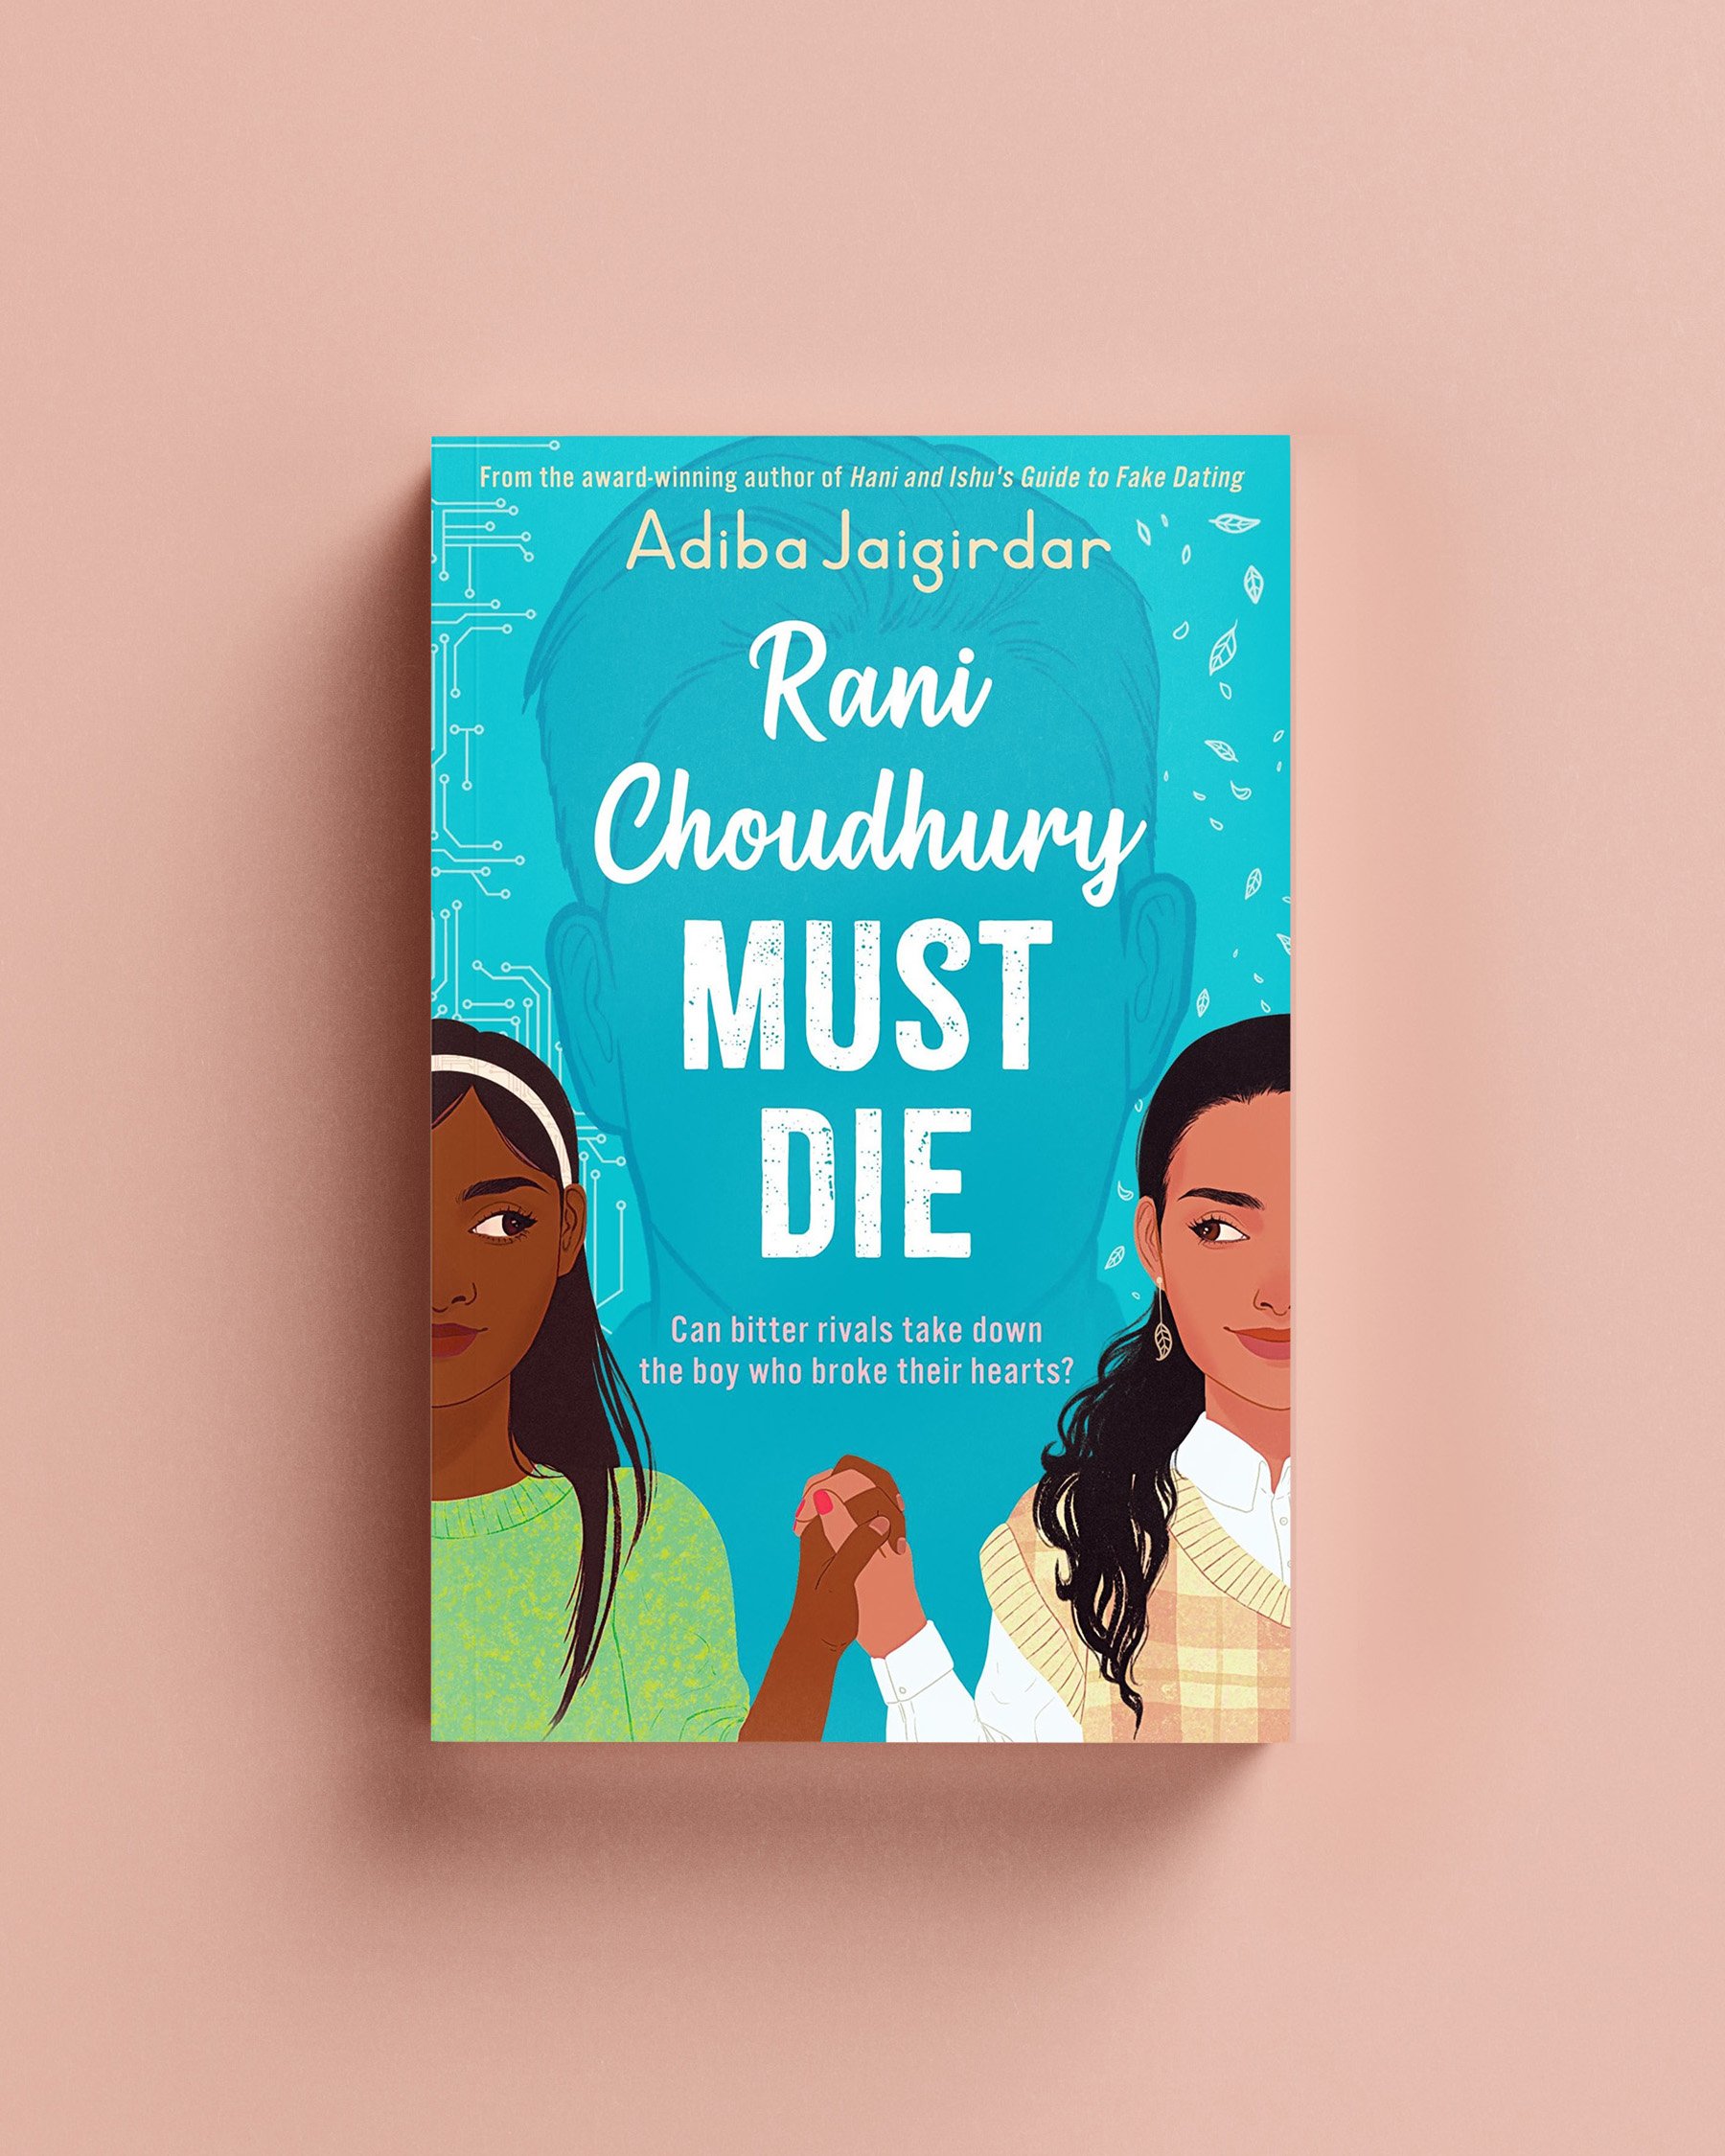 Cover for "Rani Choudhury must die" by Adiba Jaygirdar